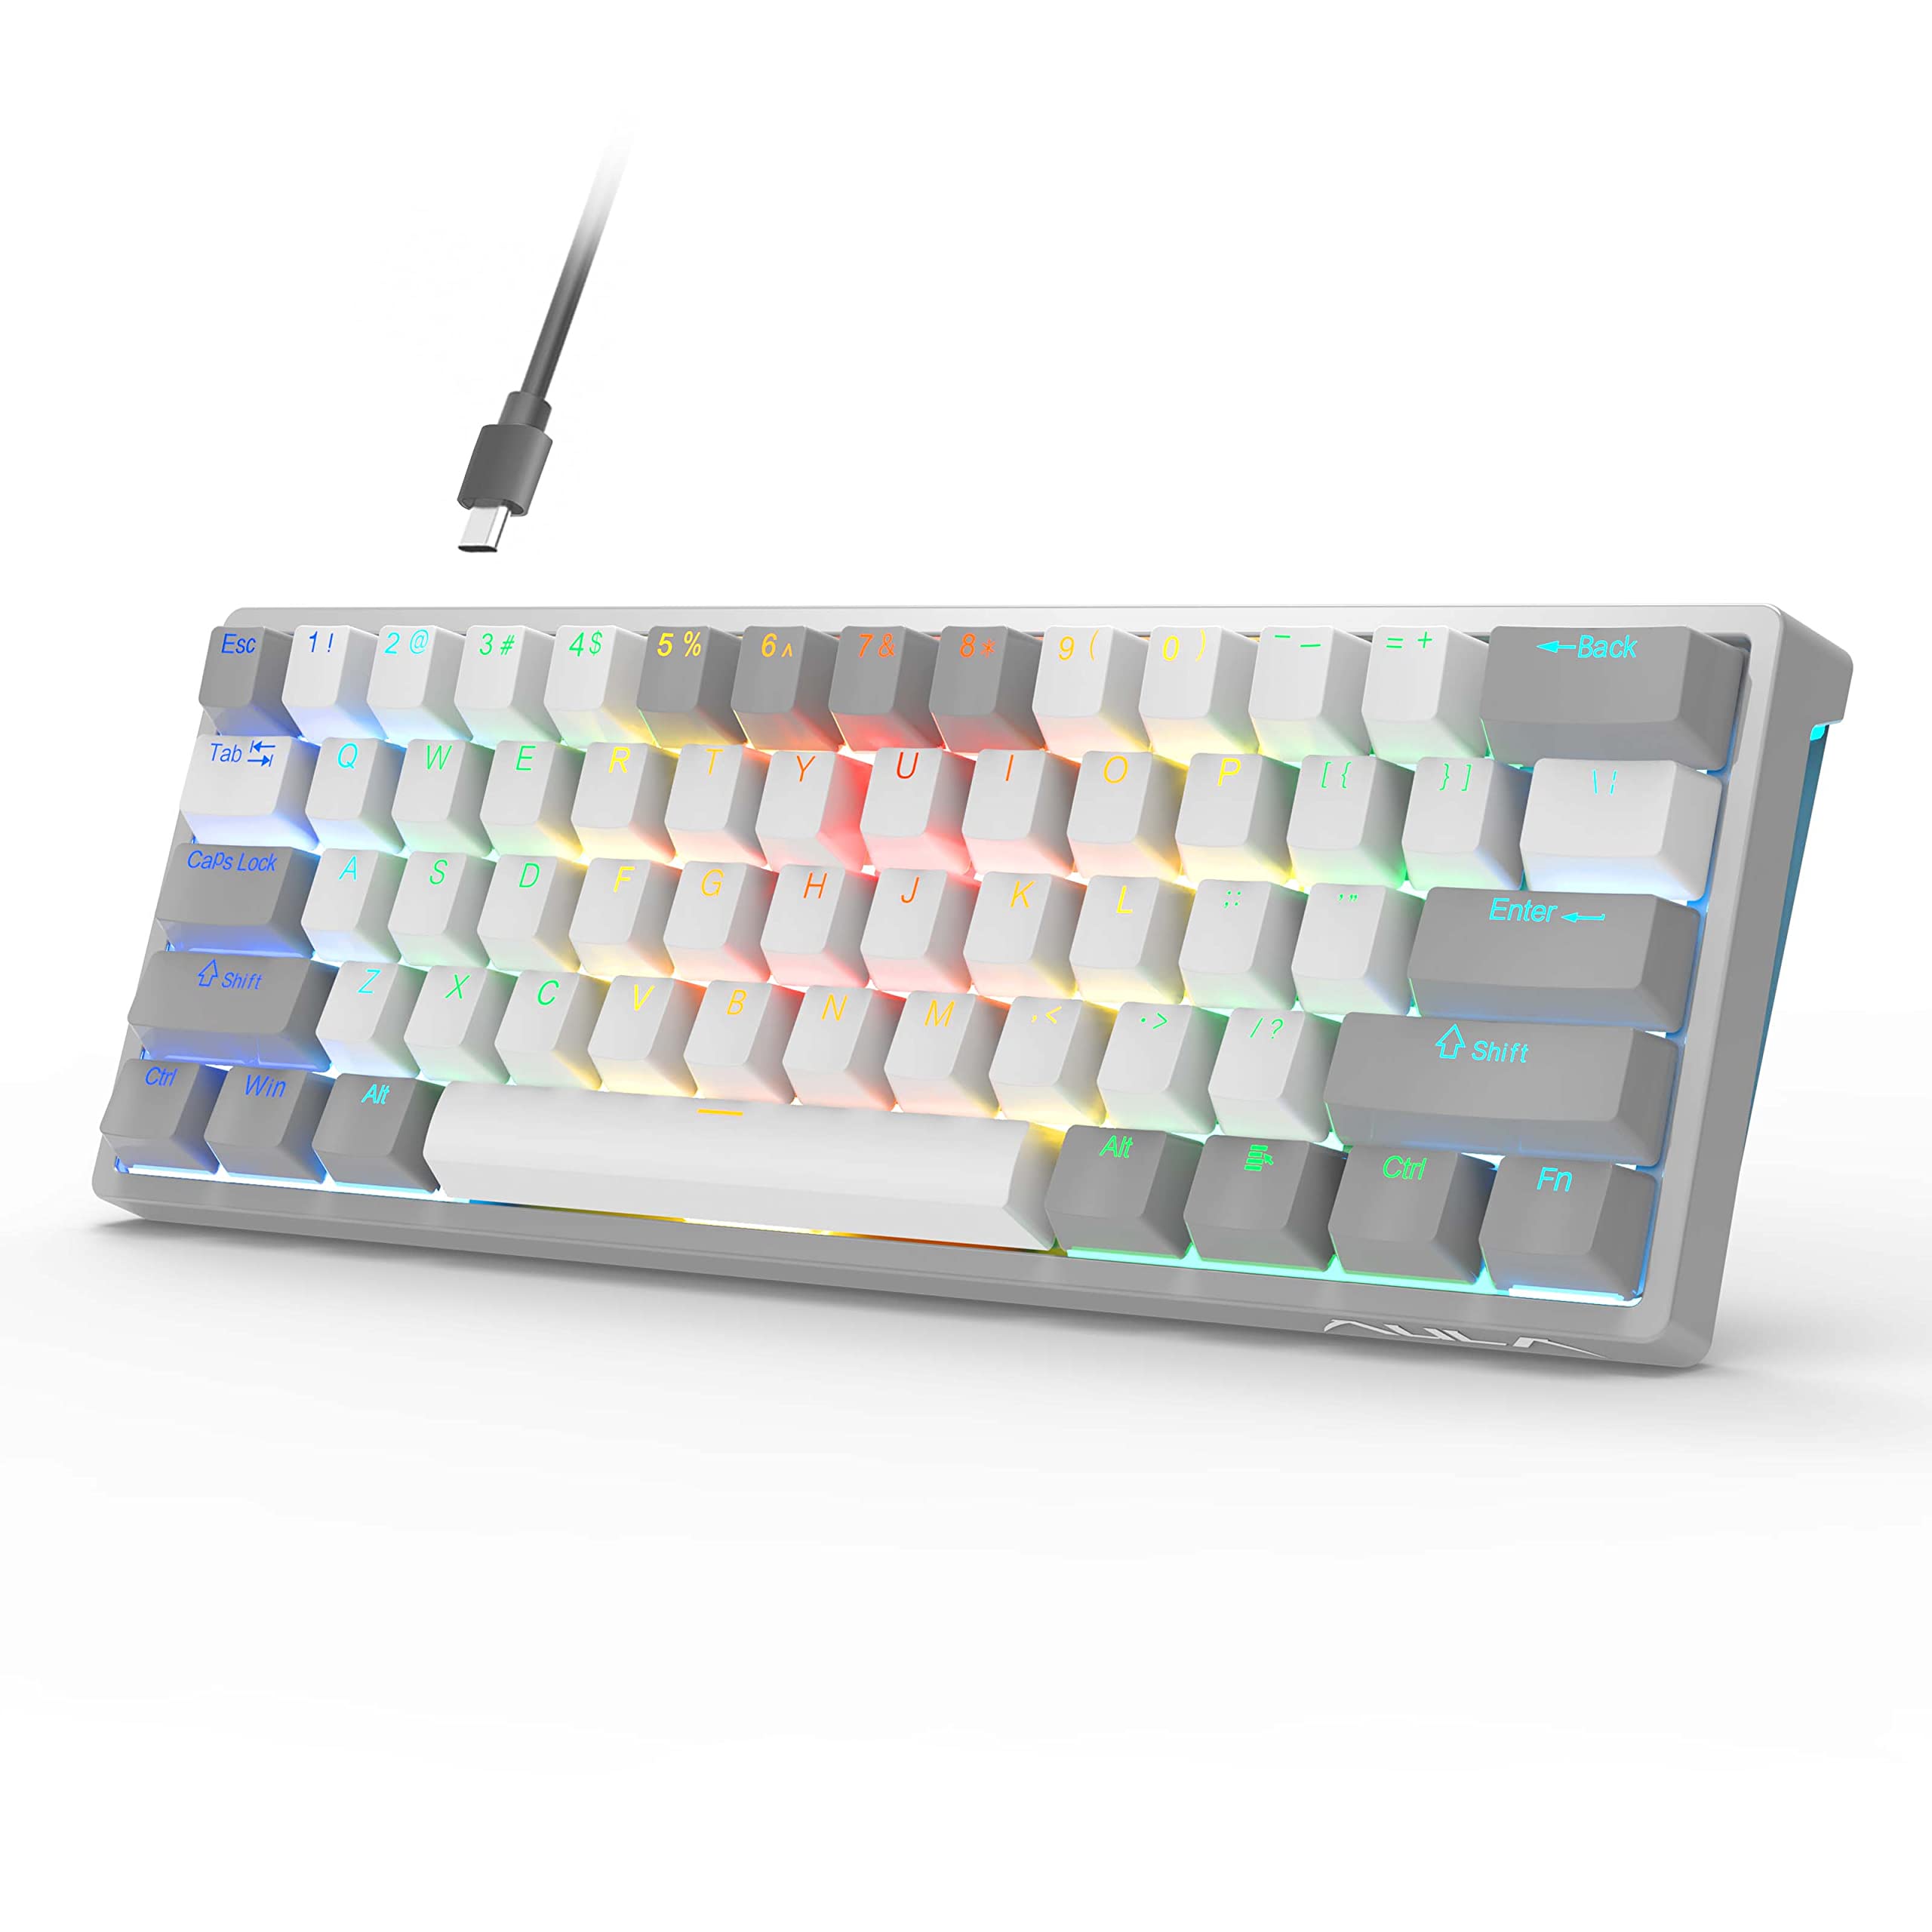 AULA Mechanical Keyboard 60 Percent 29 RGB PC Gaming Keyboards 60 Percent, Mini Compact Low Profile Keyboard, Hot Swappable Mechanical Keyboard with Red Switches-Grey&White